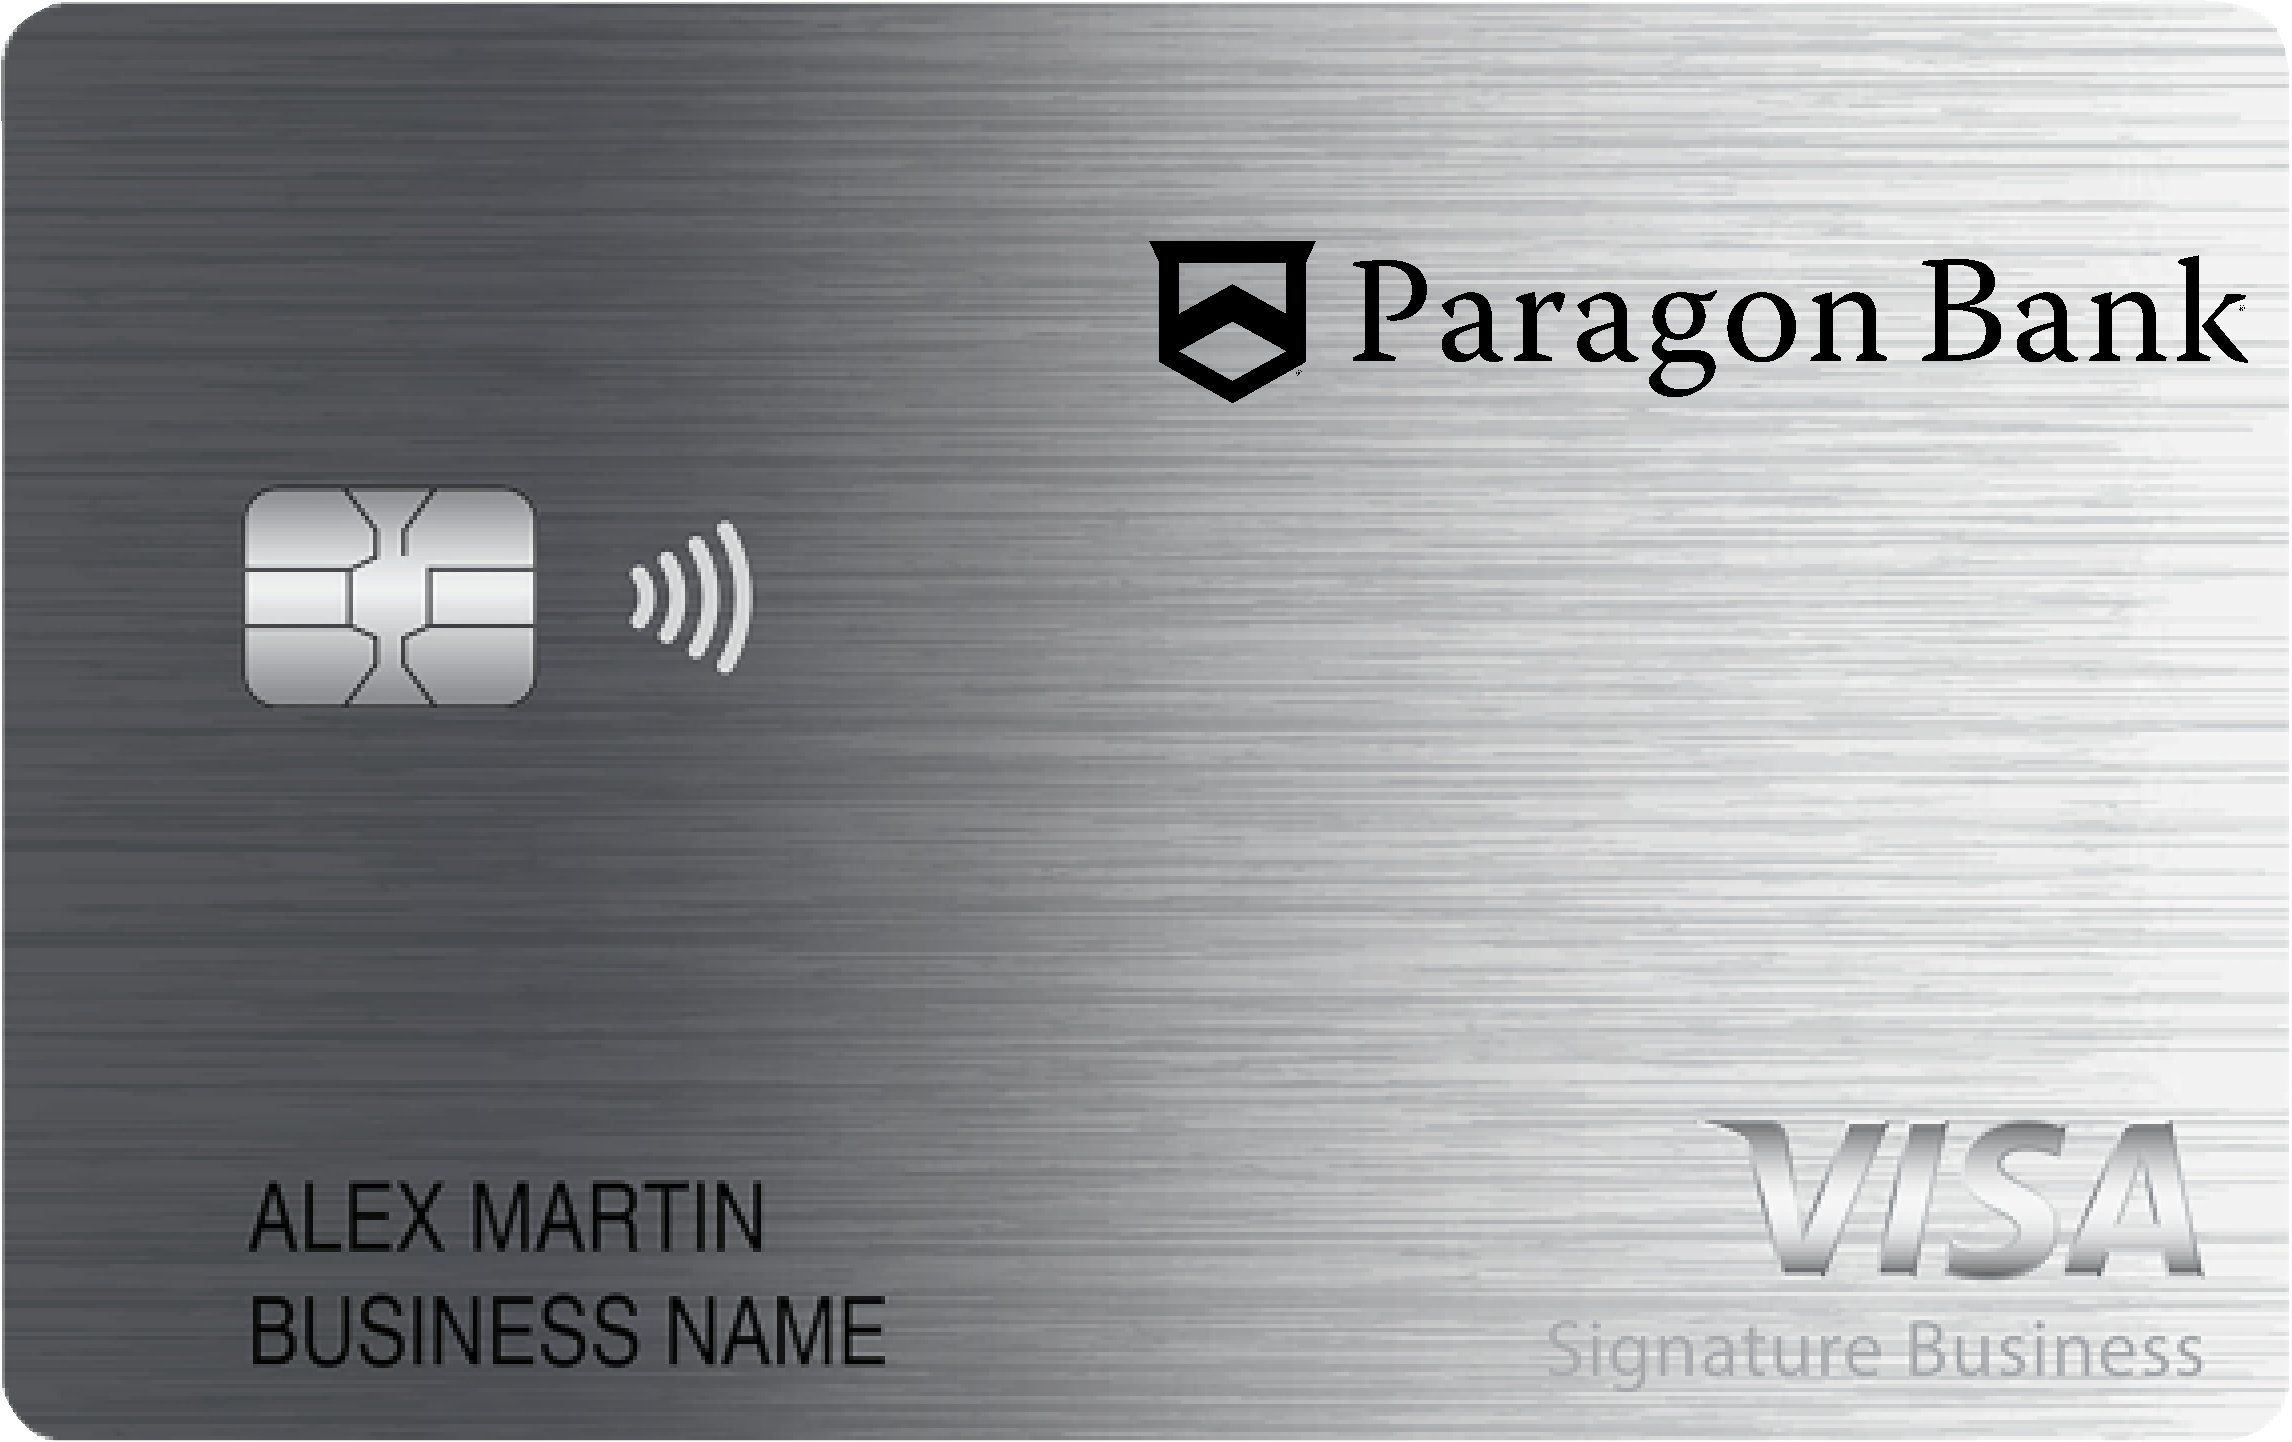 Paragon Bank Smart Business Rewards Card